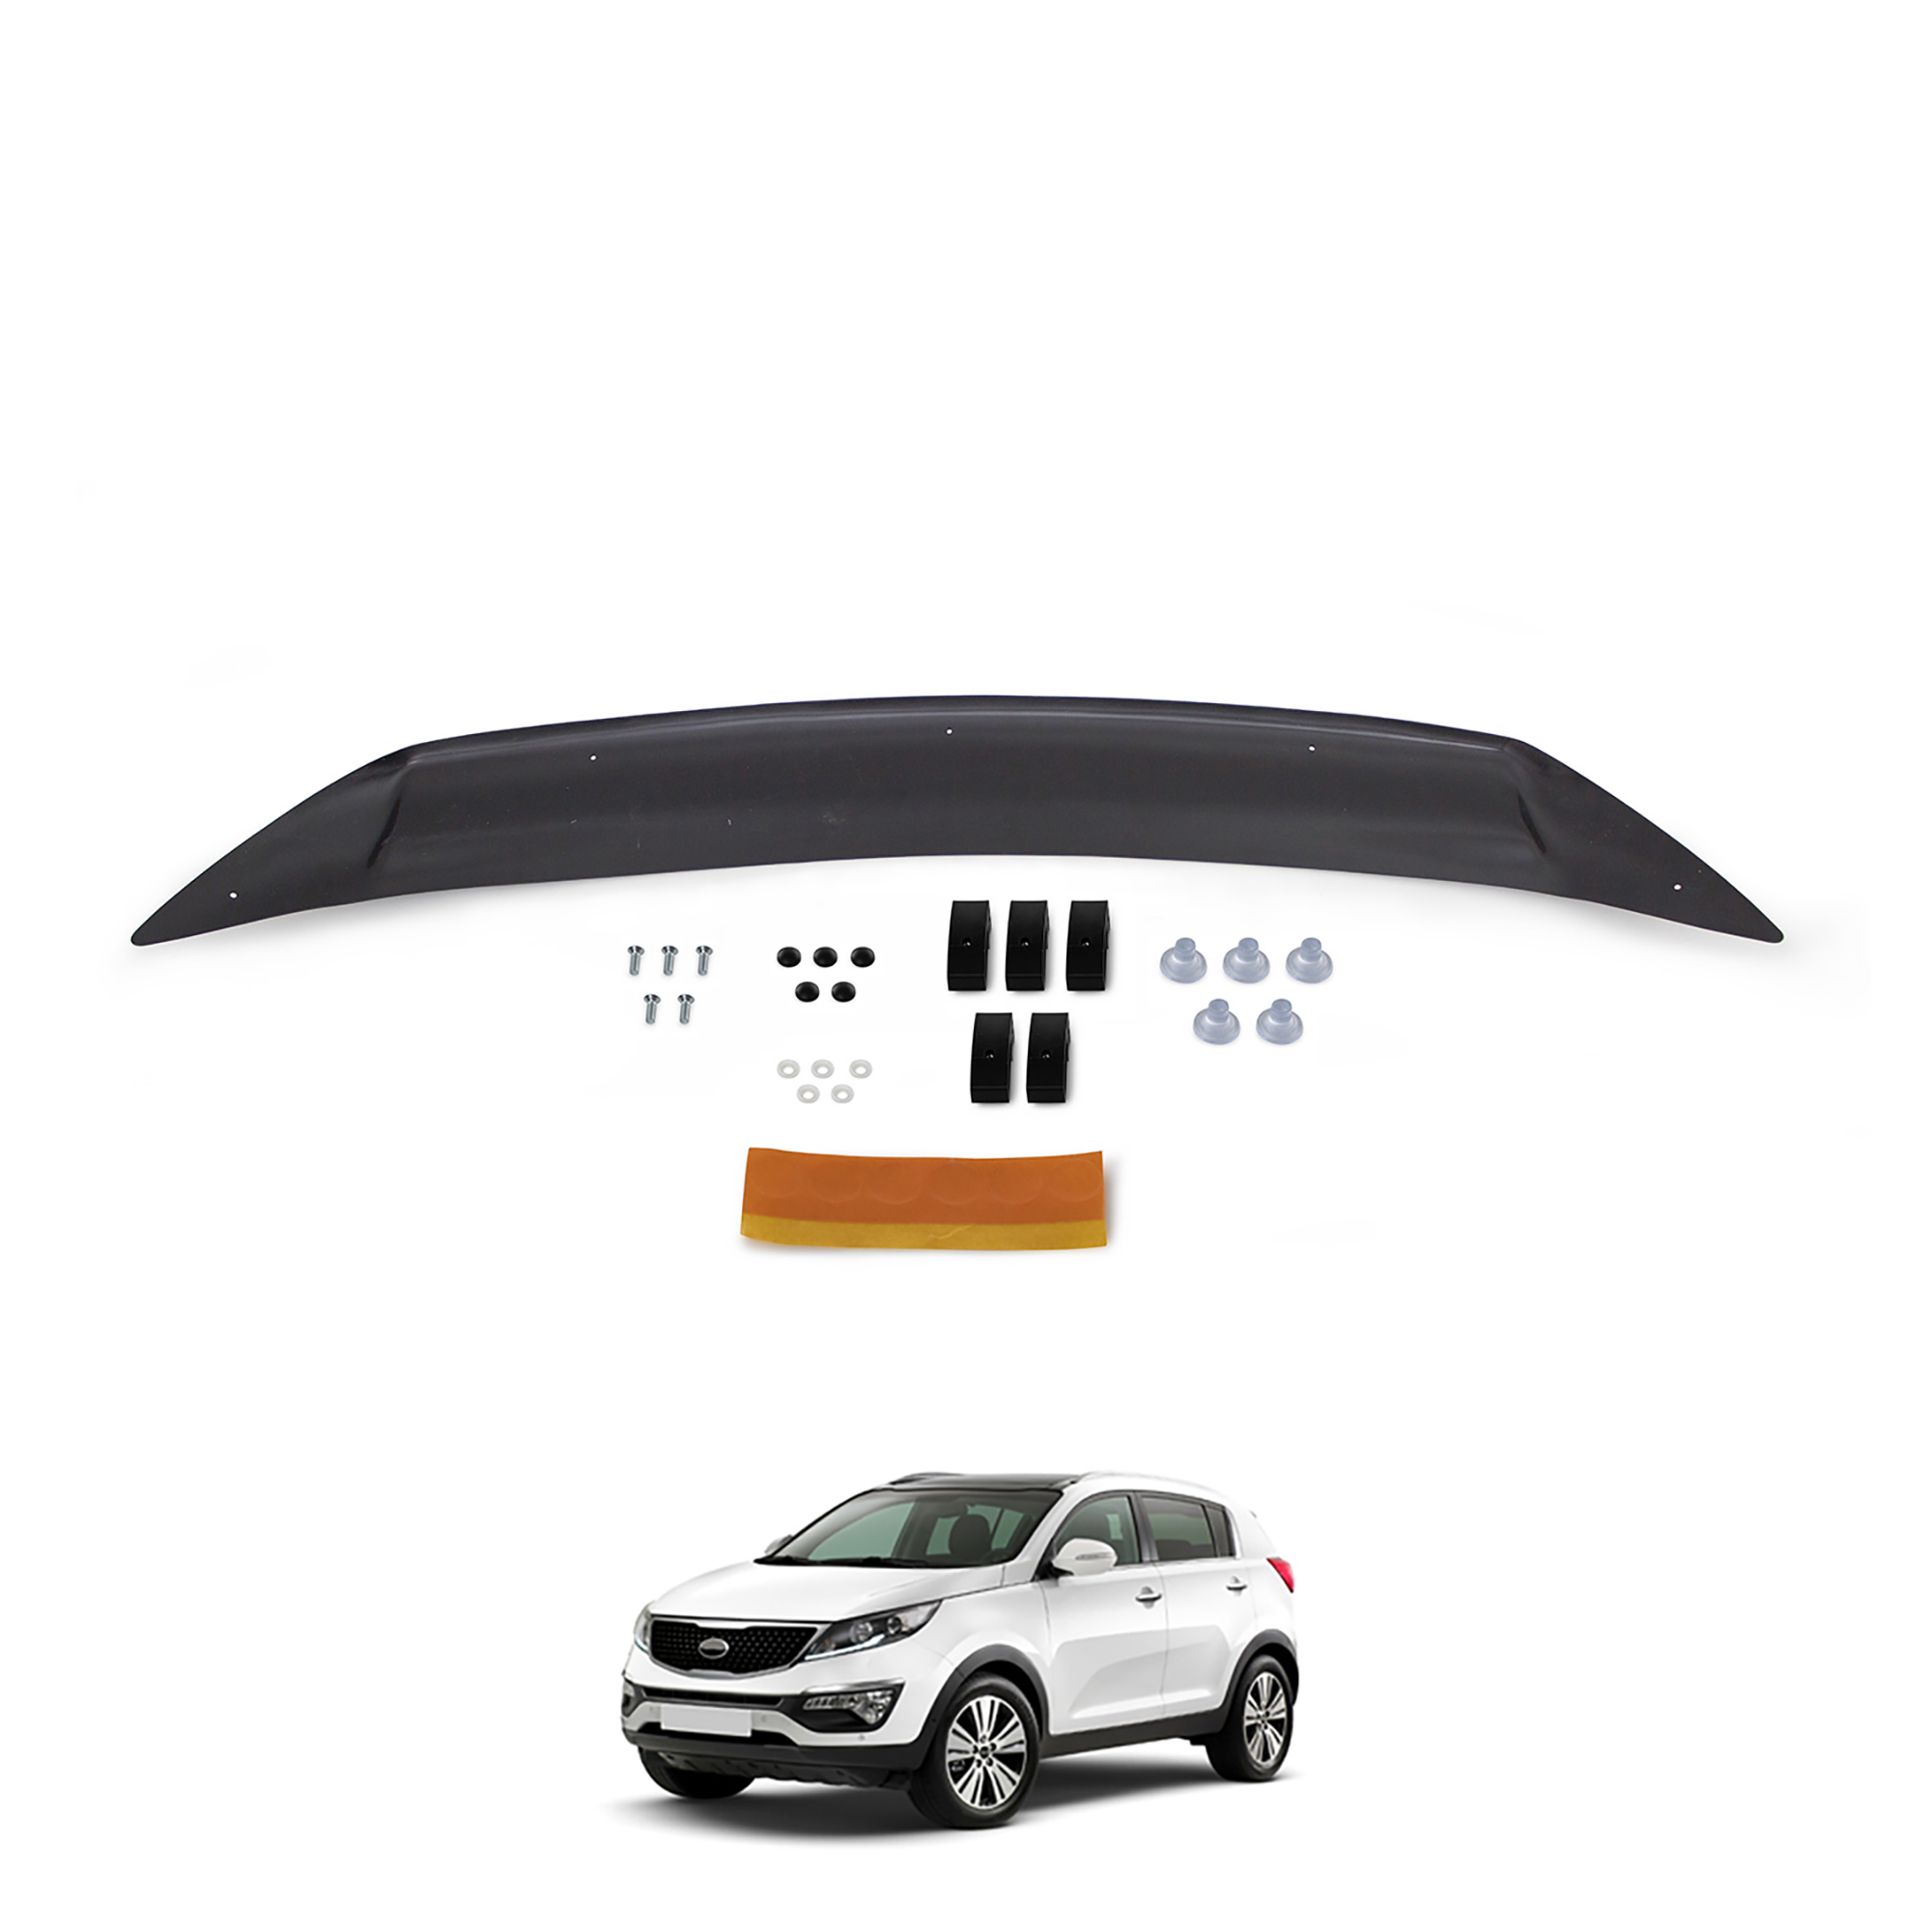 Kia Sportage (2011-2015) - Ön Kaput Rüzgarlığı - (1 Parça ABS Plastik) - (SUV-4 mm)